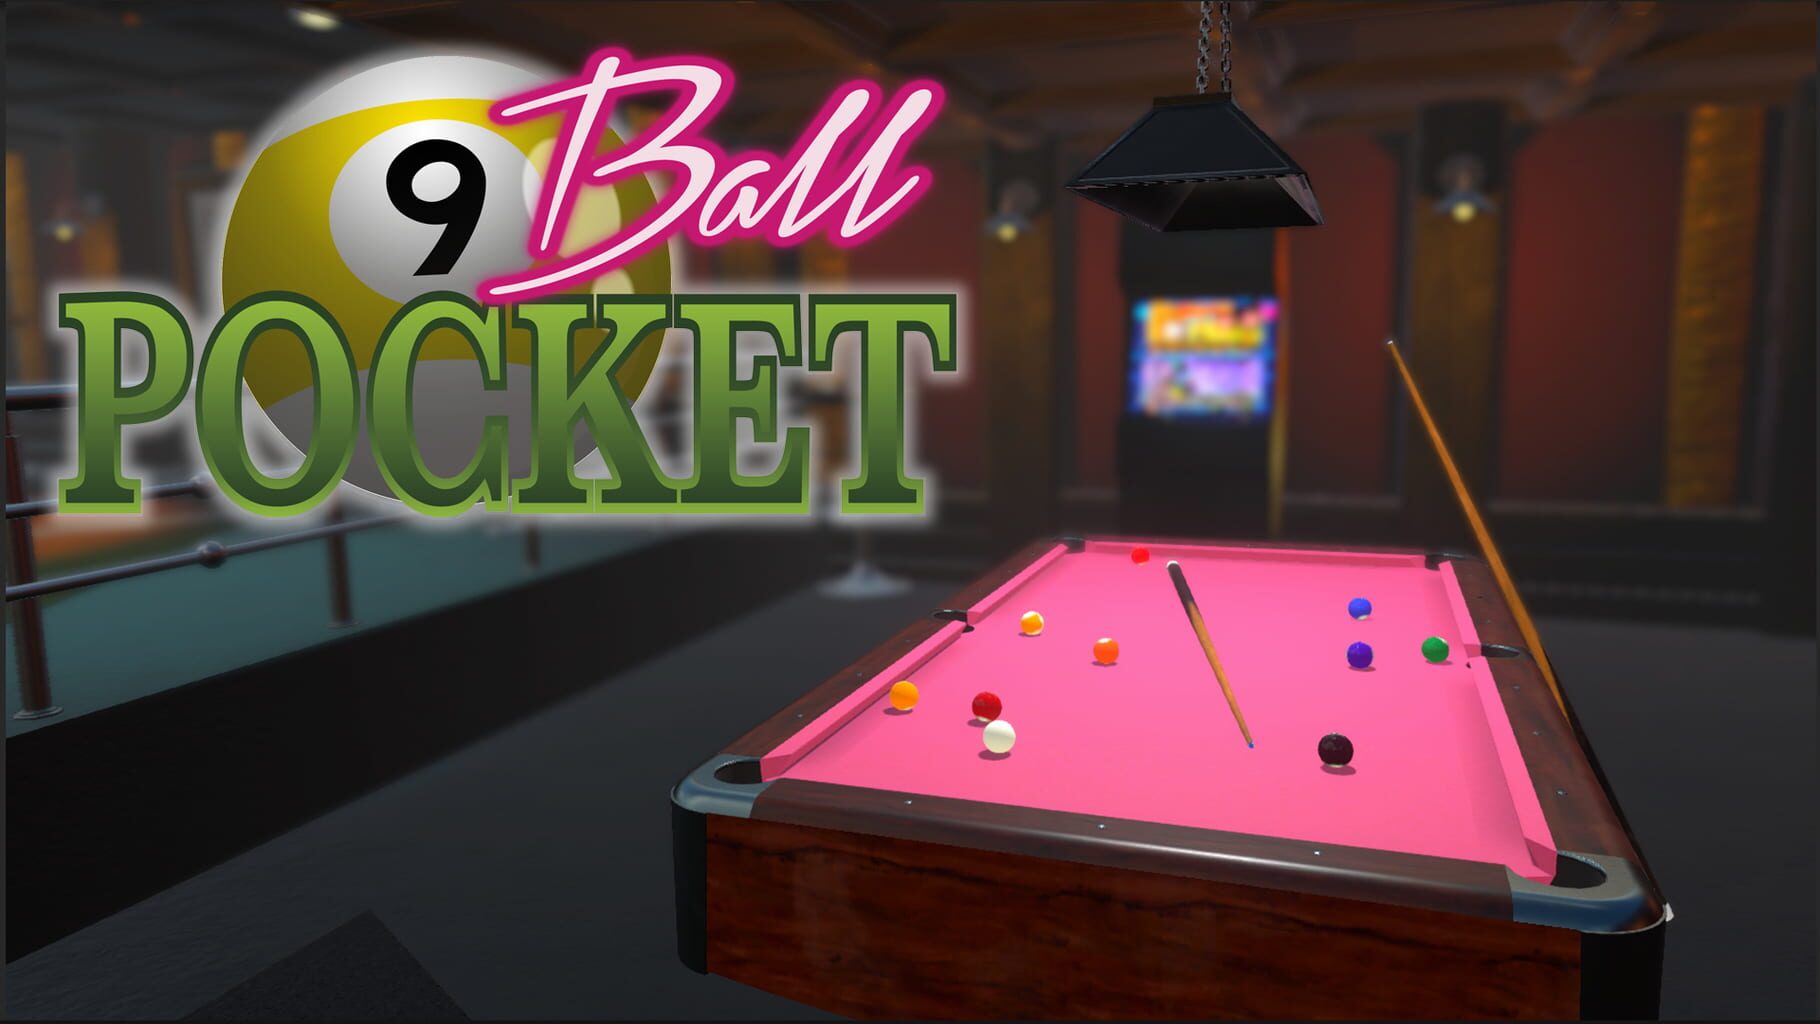 9-Ball Pocket artwork